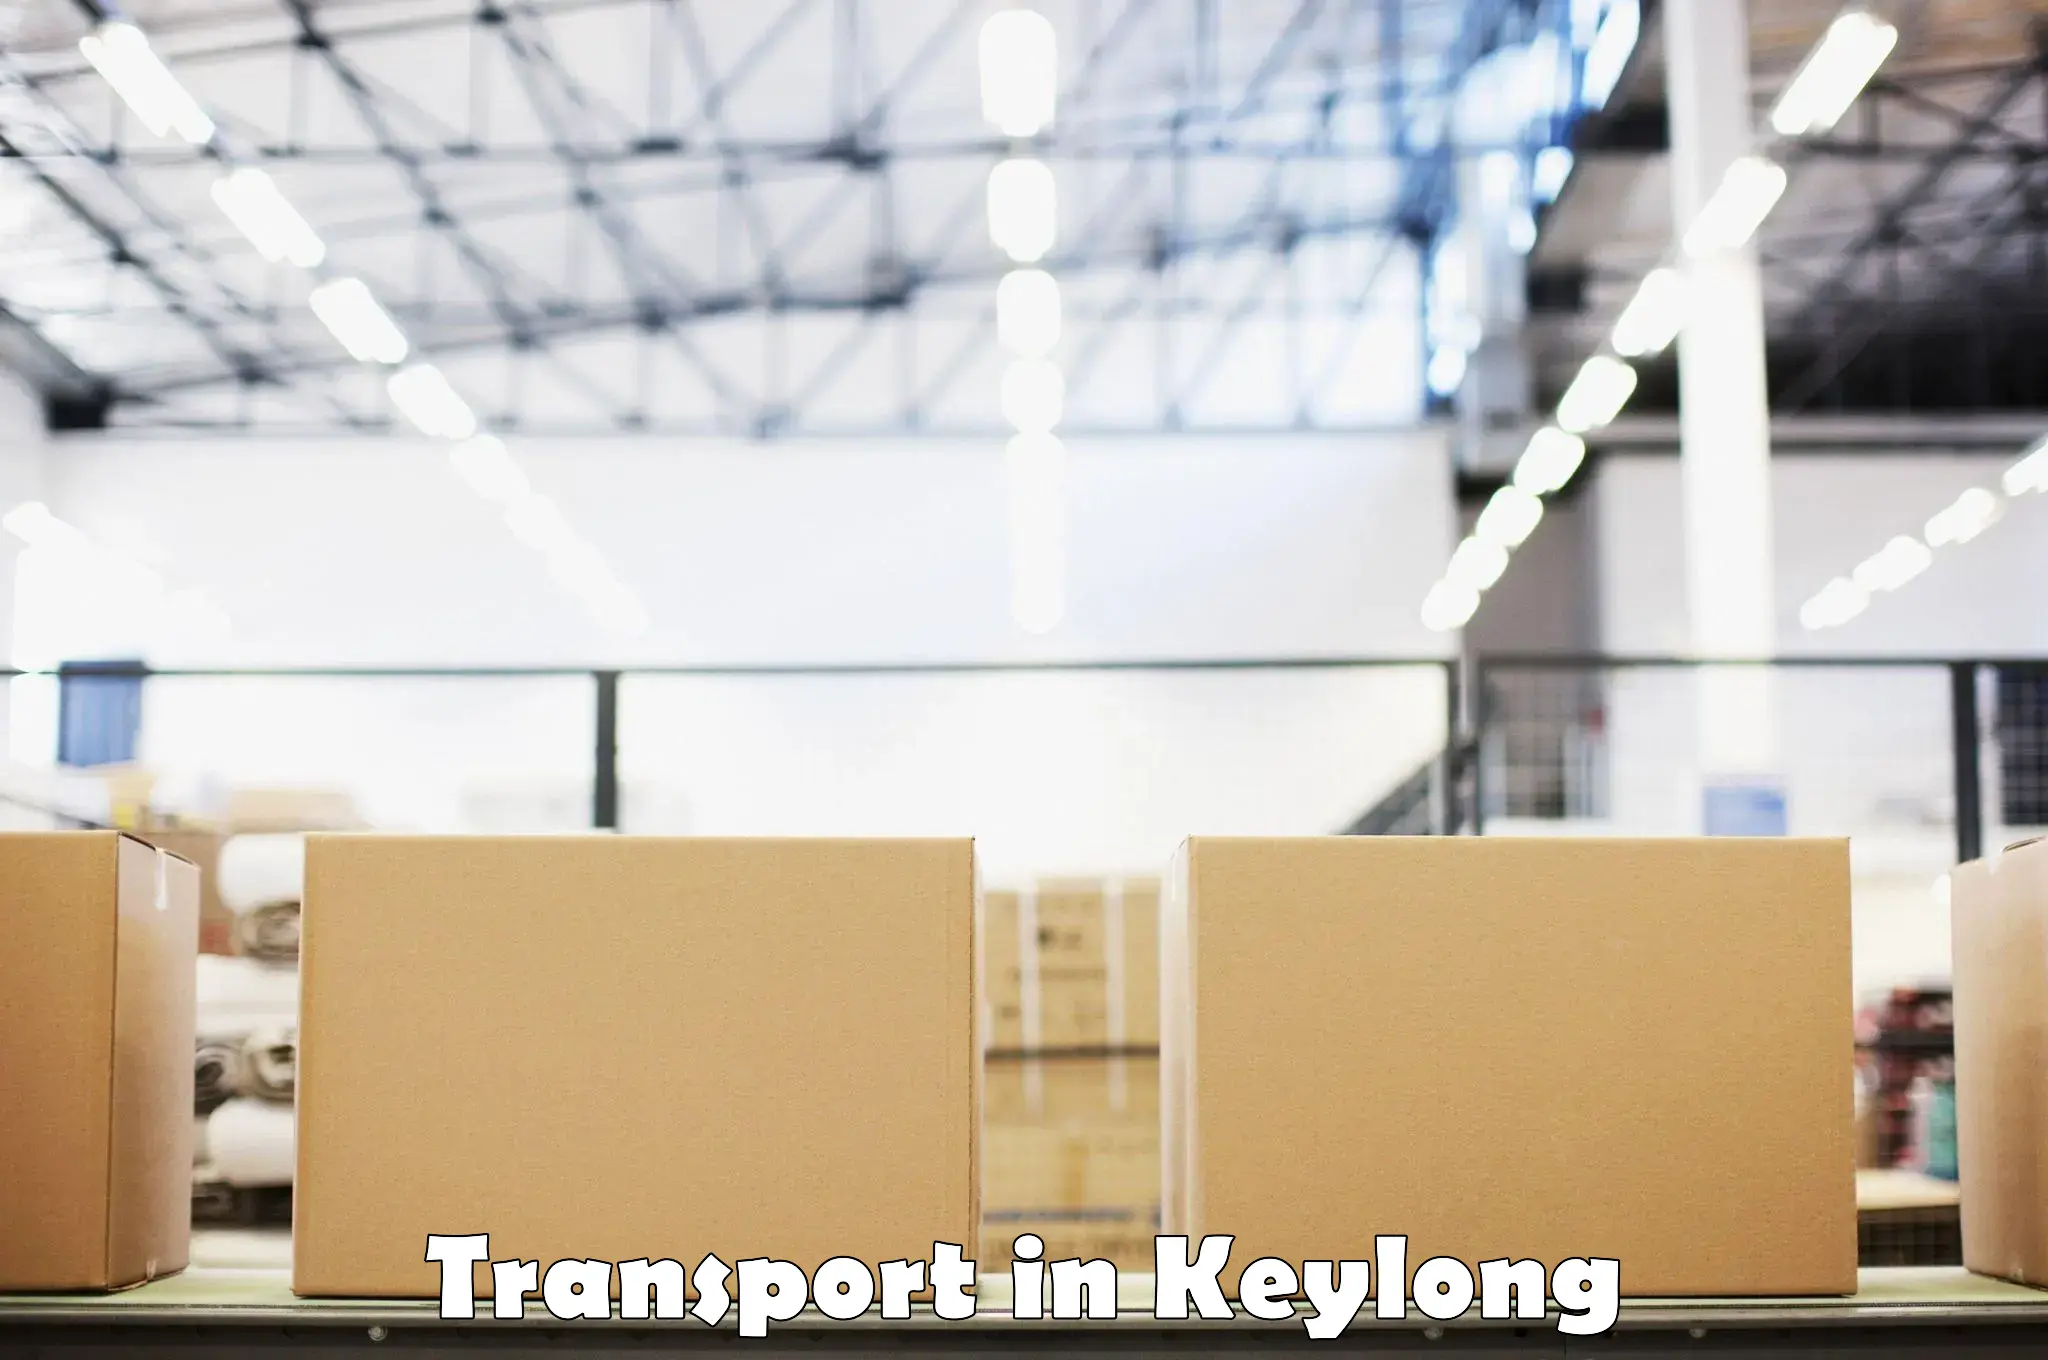 Intercity goods transport in Keylong